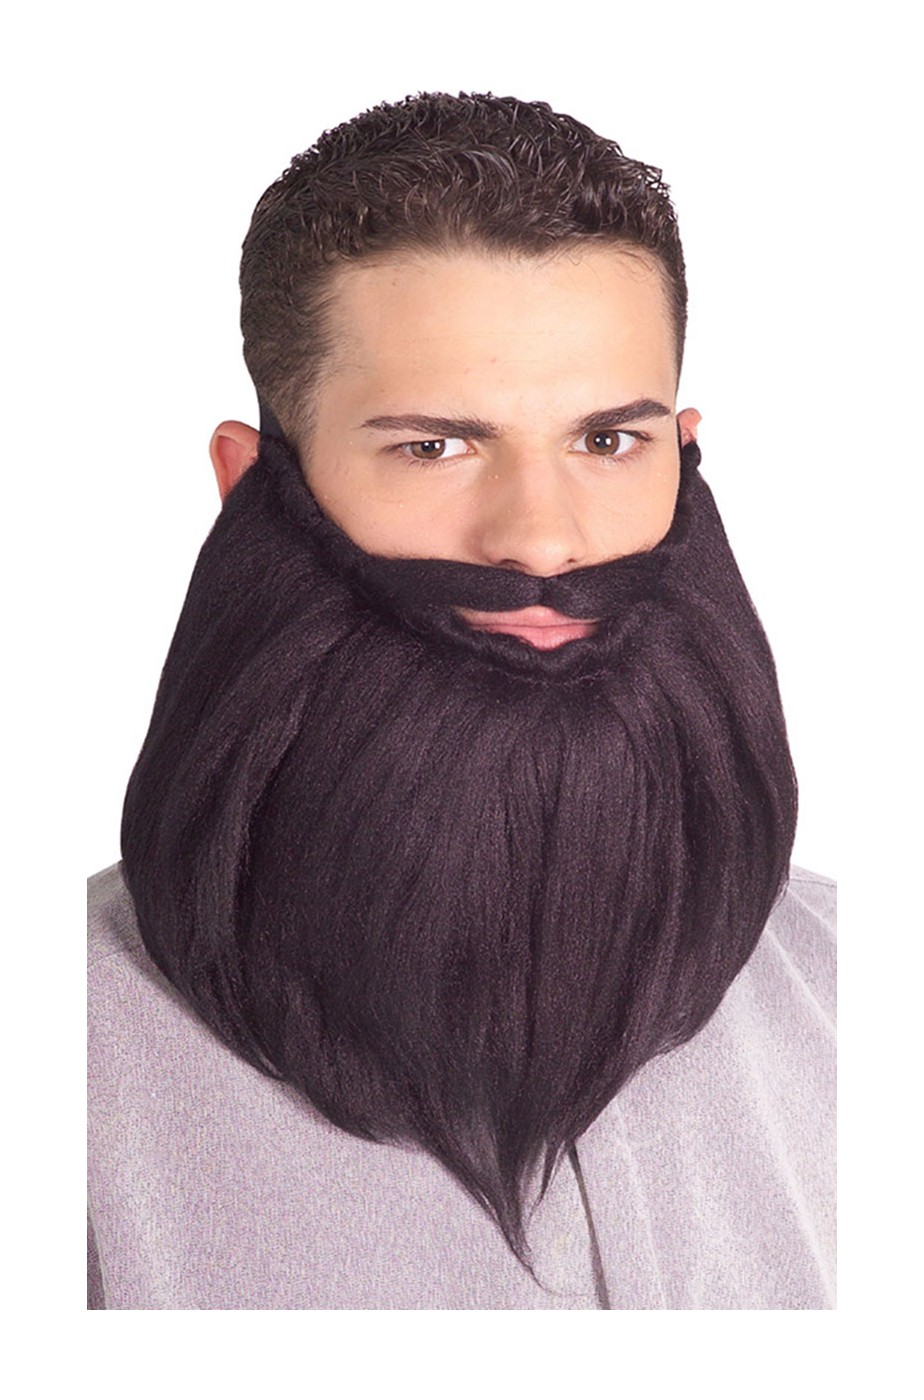 Barba di carnevale nera lunga 20cm con baffi finti neri da rabbino